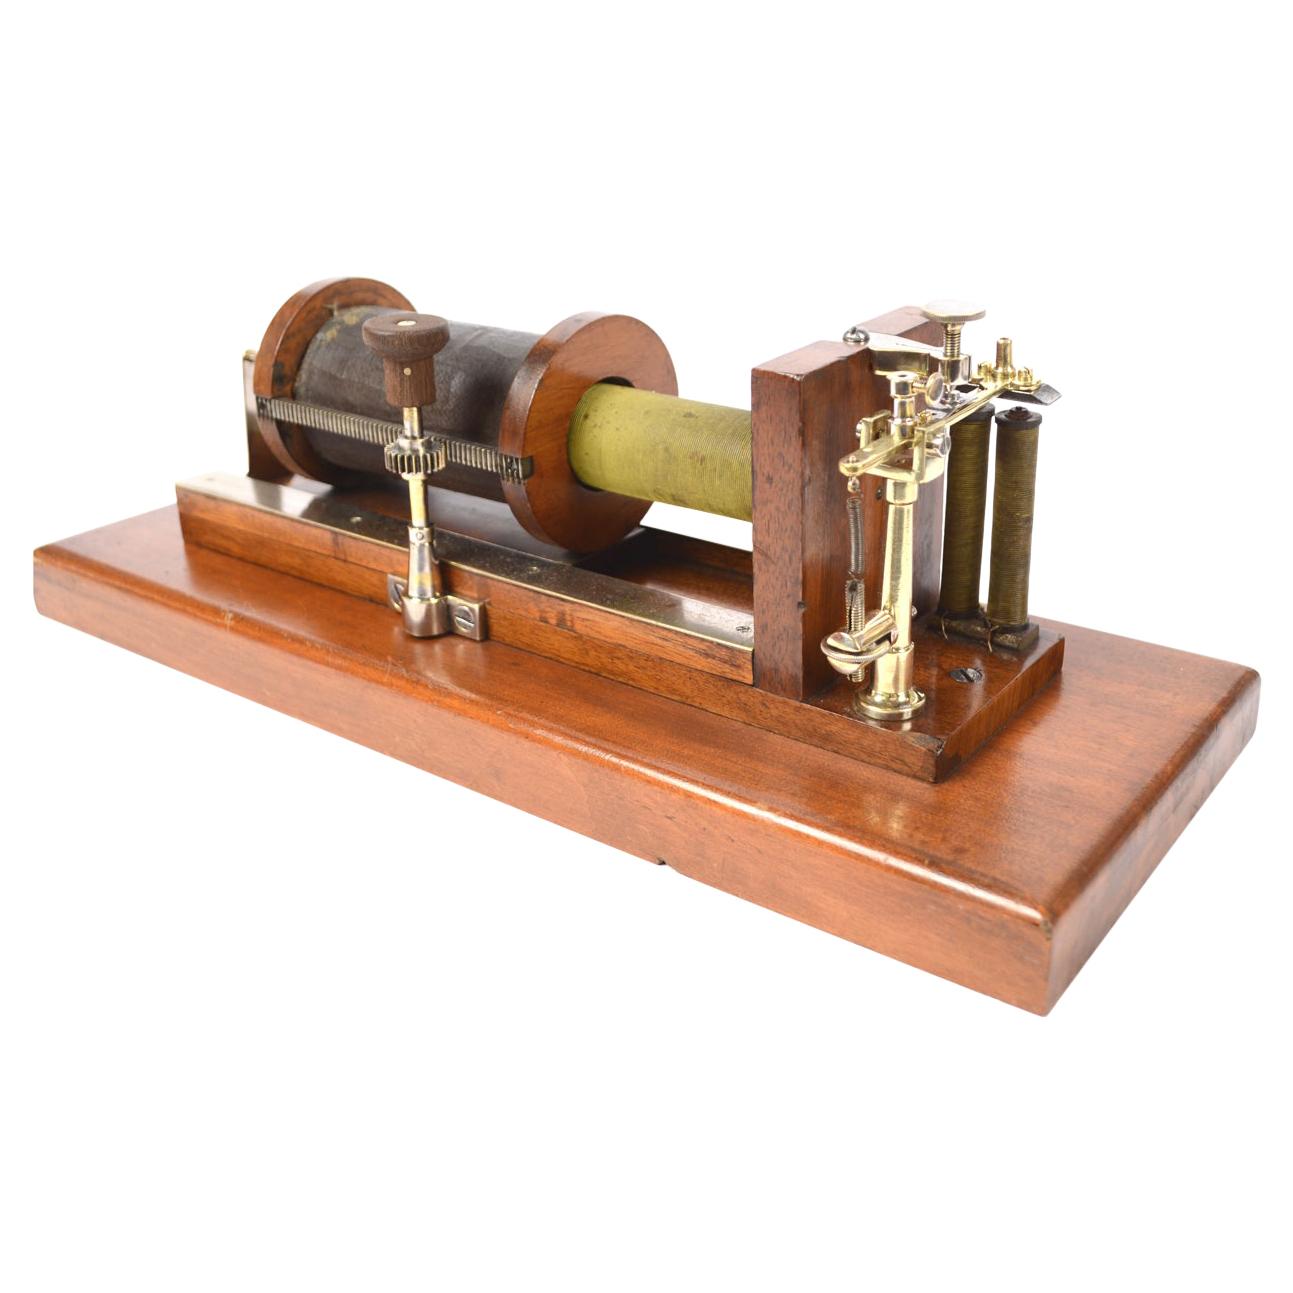 Induction Coil or Sled Antique Scientific Instrument by Du Bois Reymond 1870 